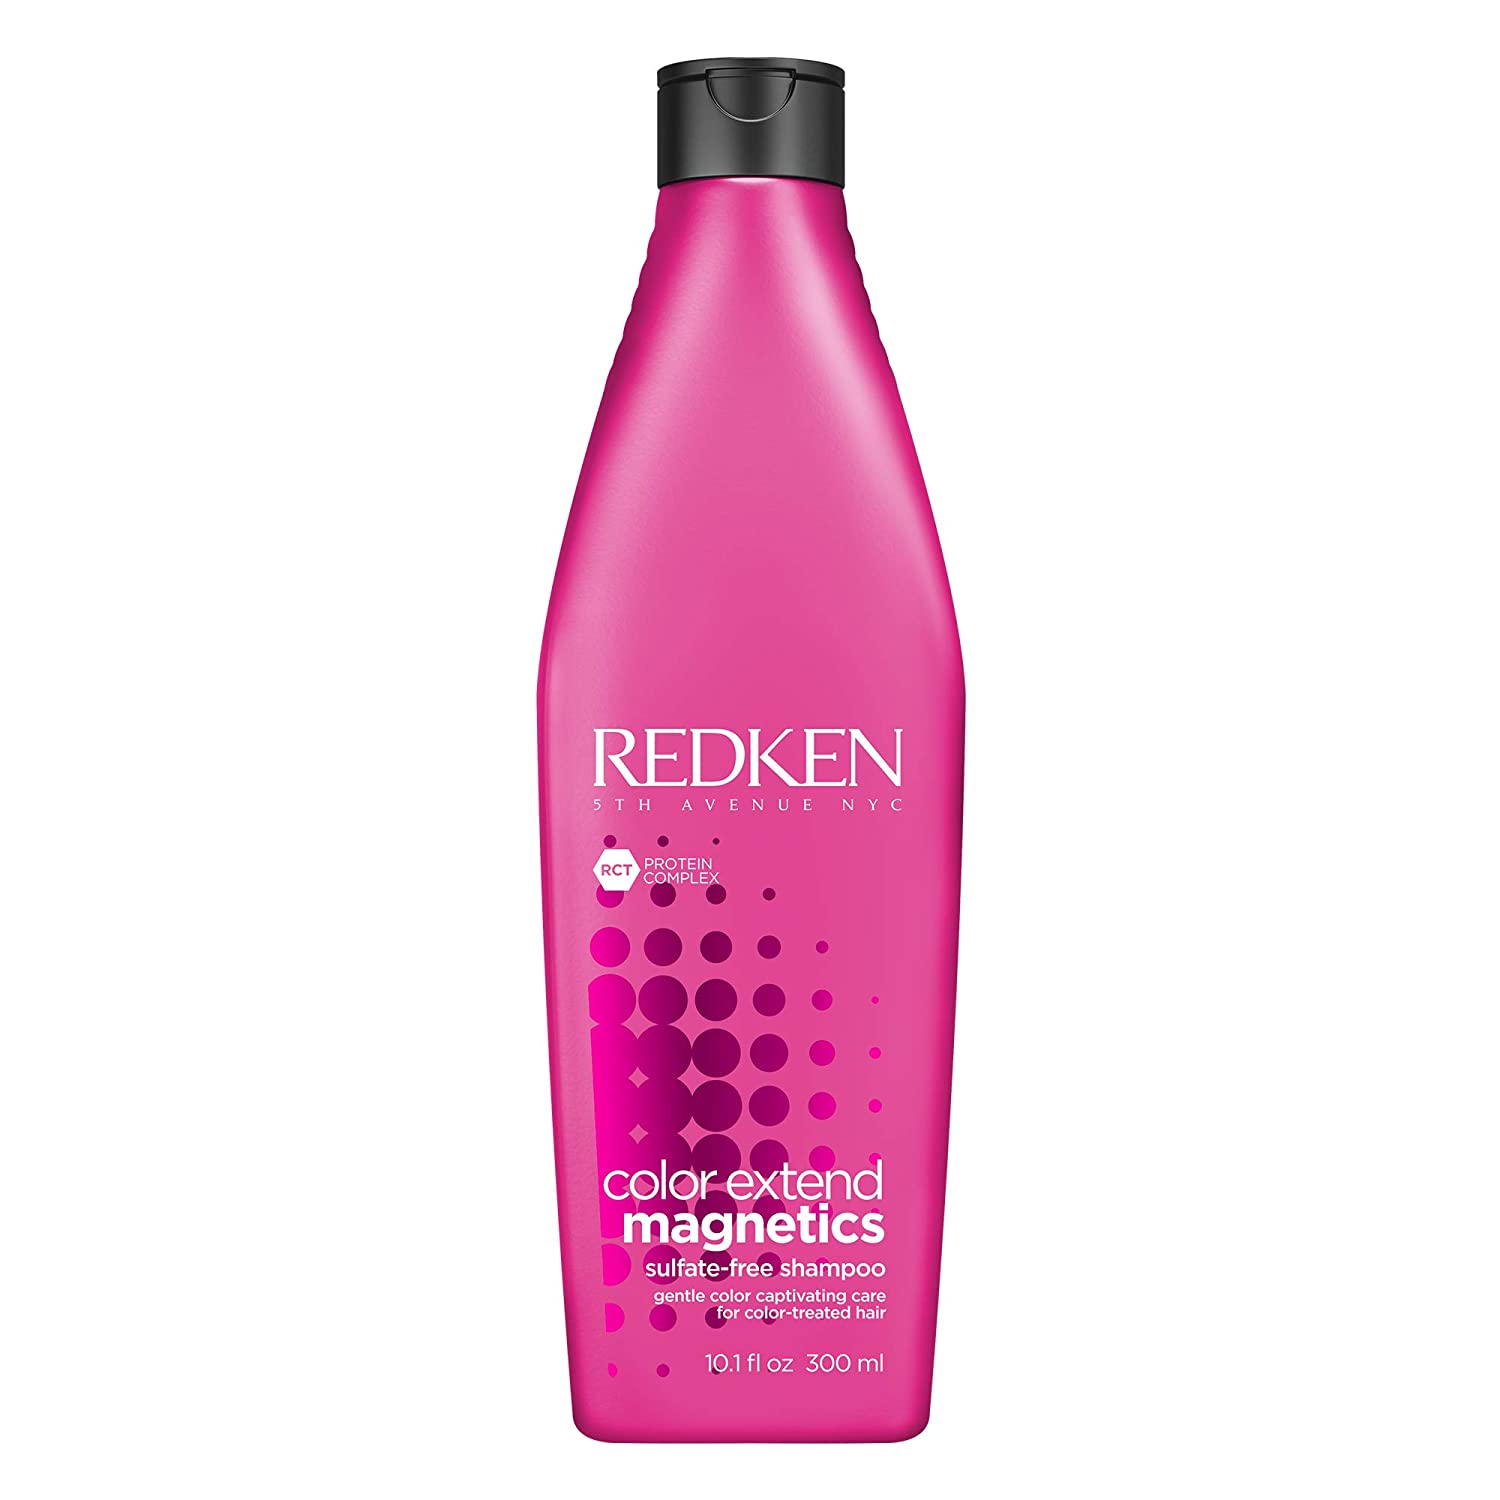 Redken - Color Extend Magnetics - Shampoo - 300ml - by Redken |ProCare Outlet|